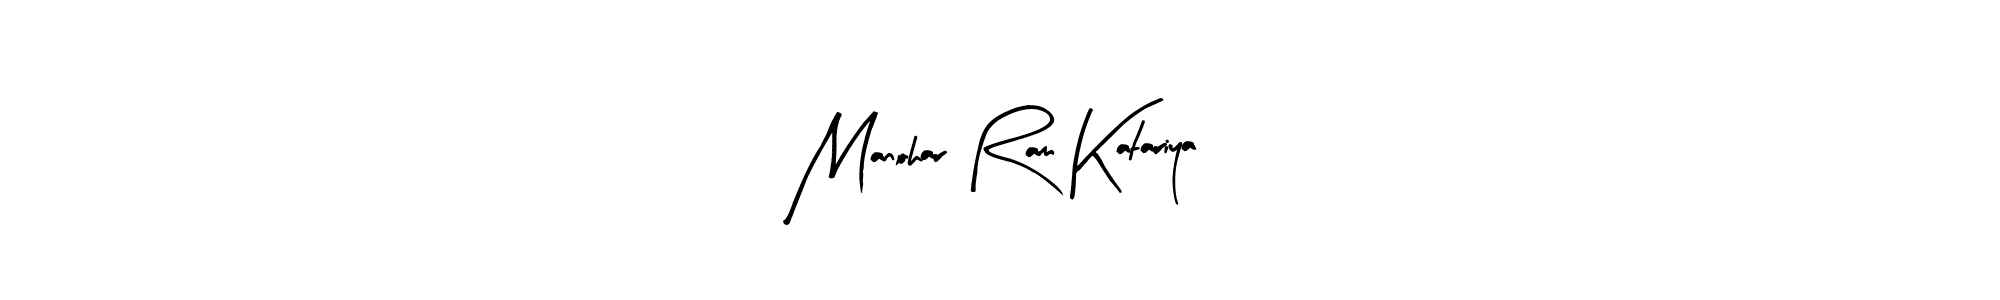 How to Draw Manohar Ram Katariya signature style? Arty Signature is a latest design signature styles for name Manohar Ram Katariya. Manohar Ram Katariya signature style 8 images and pictures png